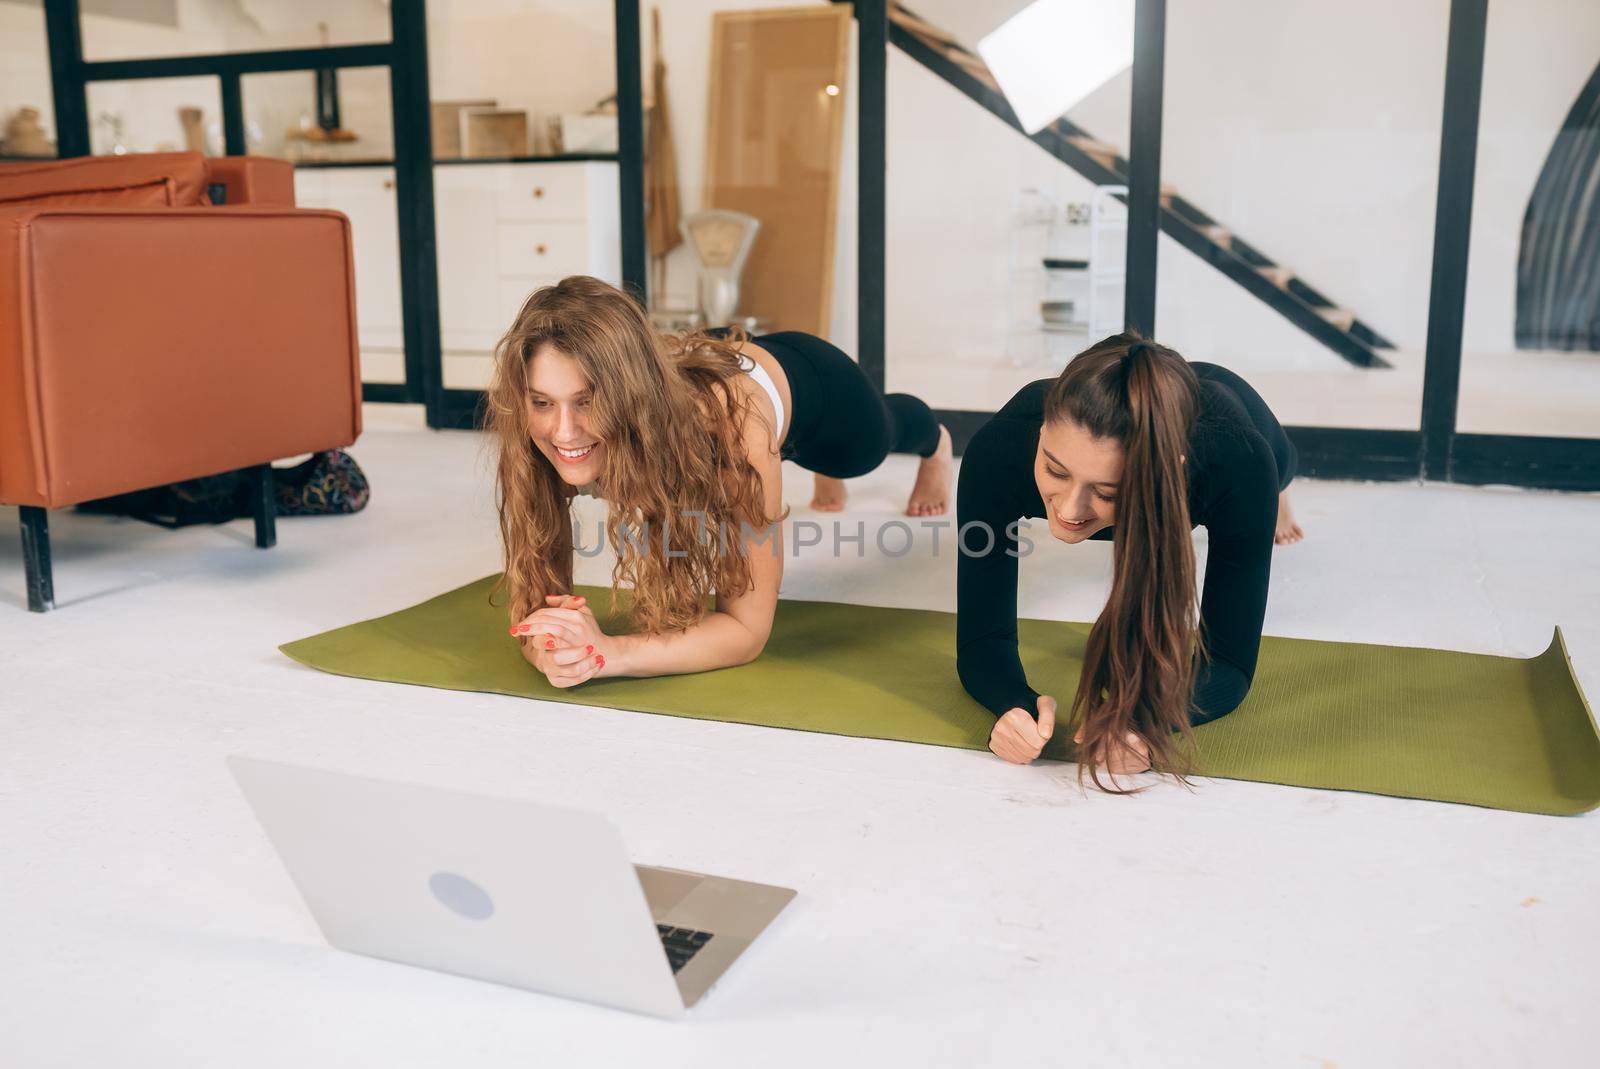 Two charming sports women, do yoga poses, exercises at home by teksomolika